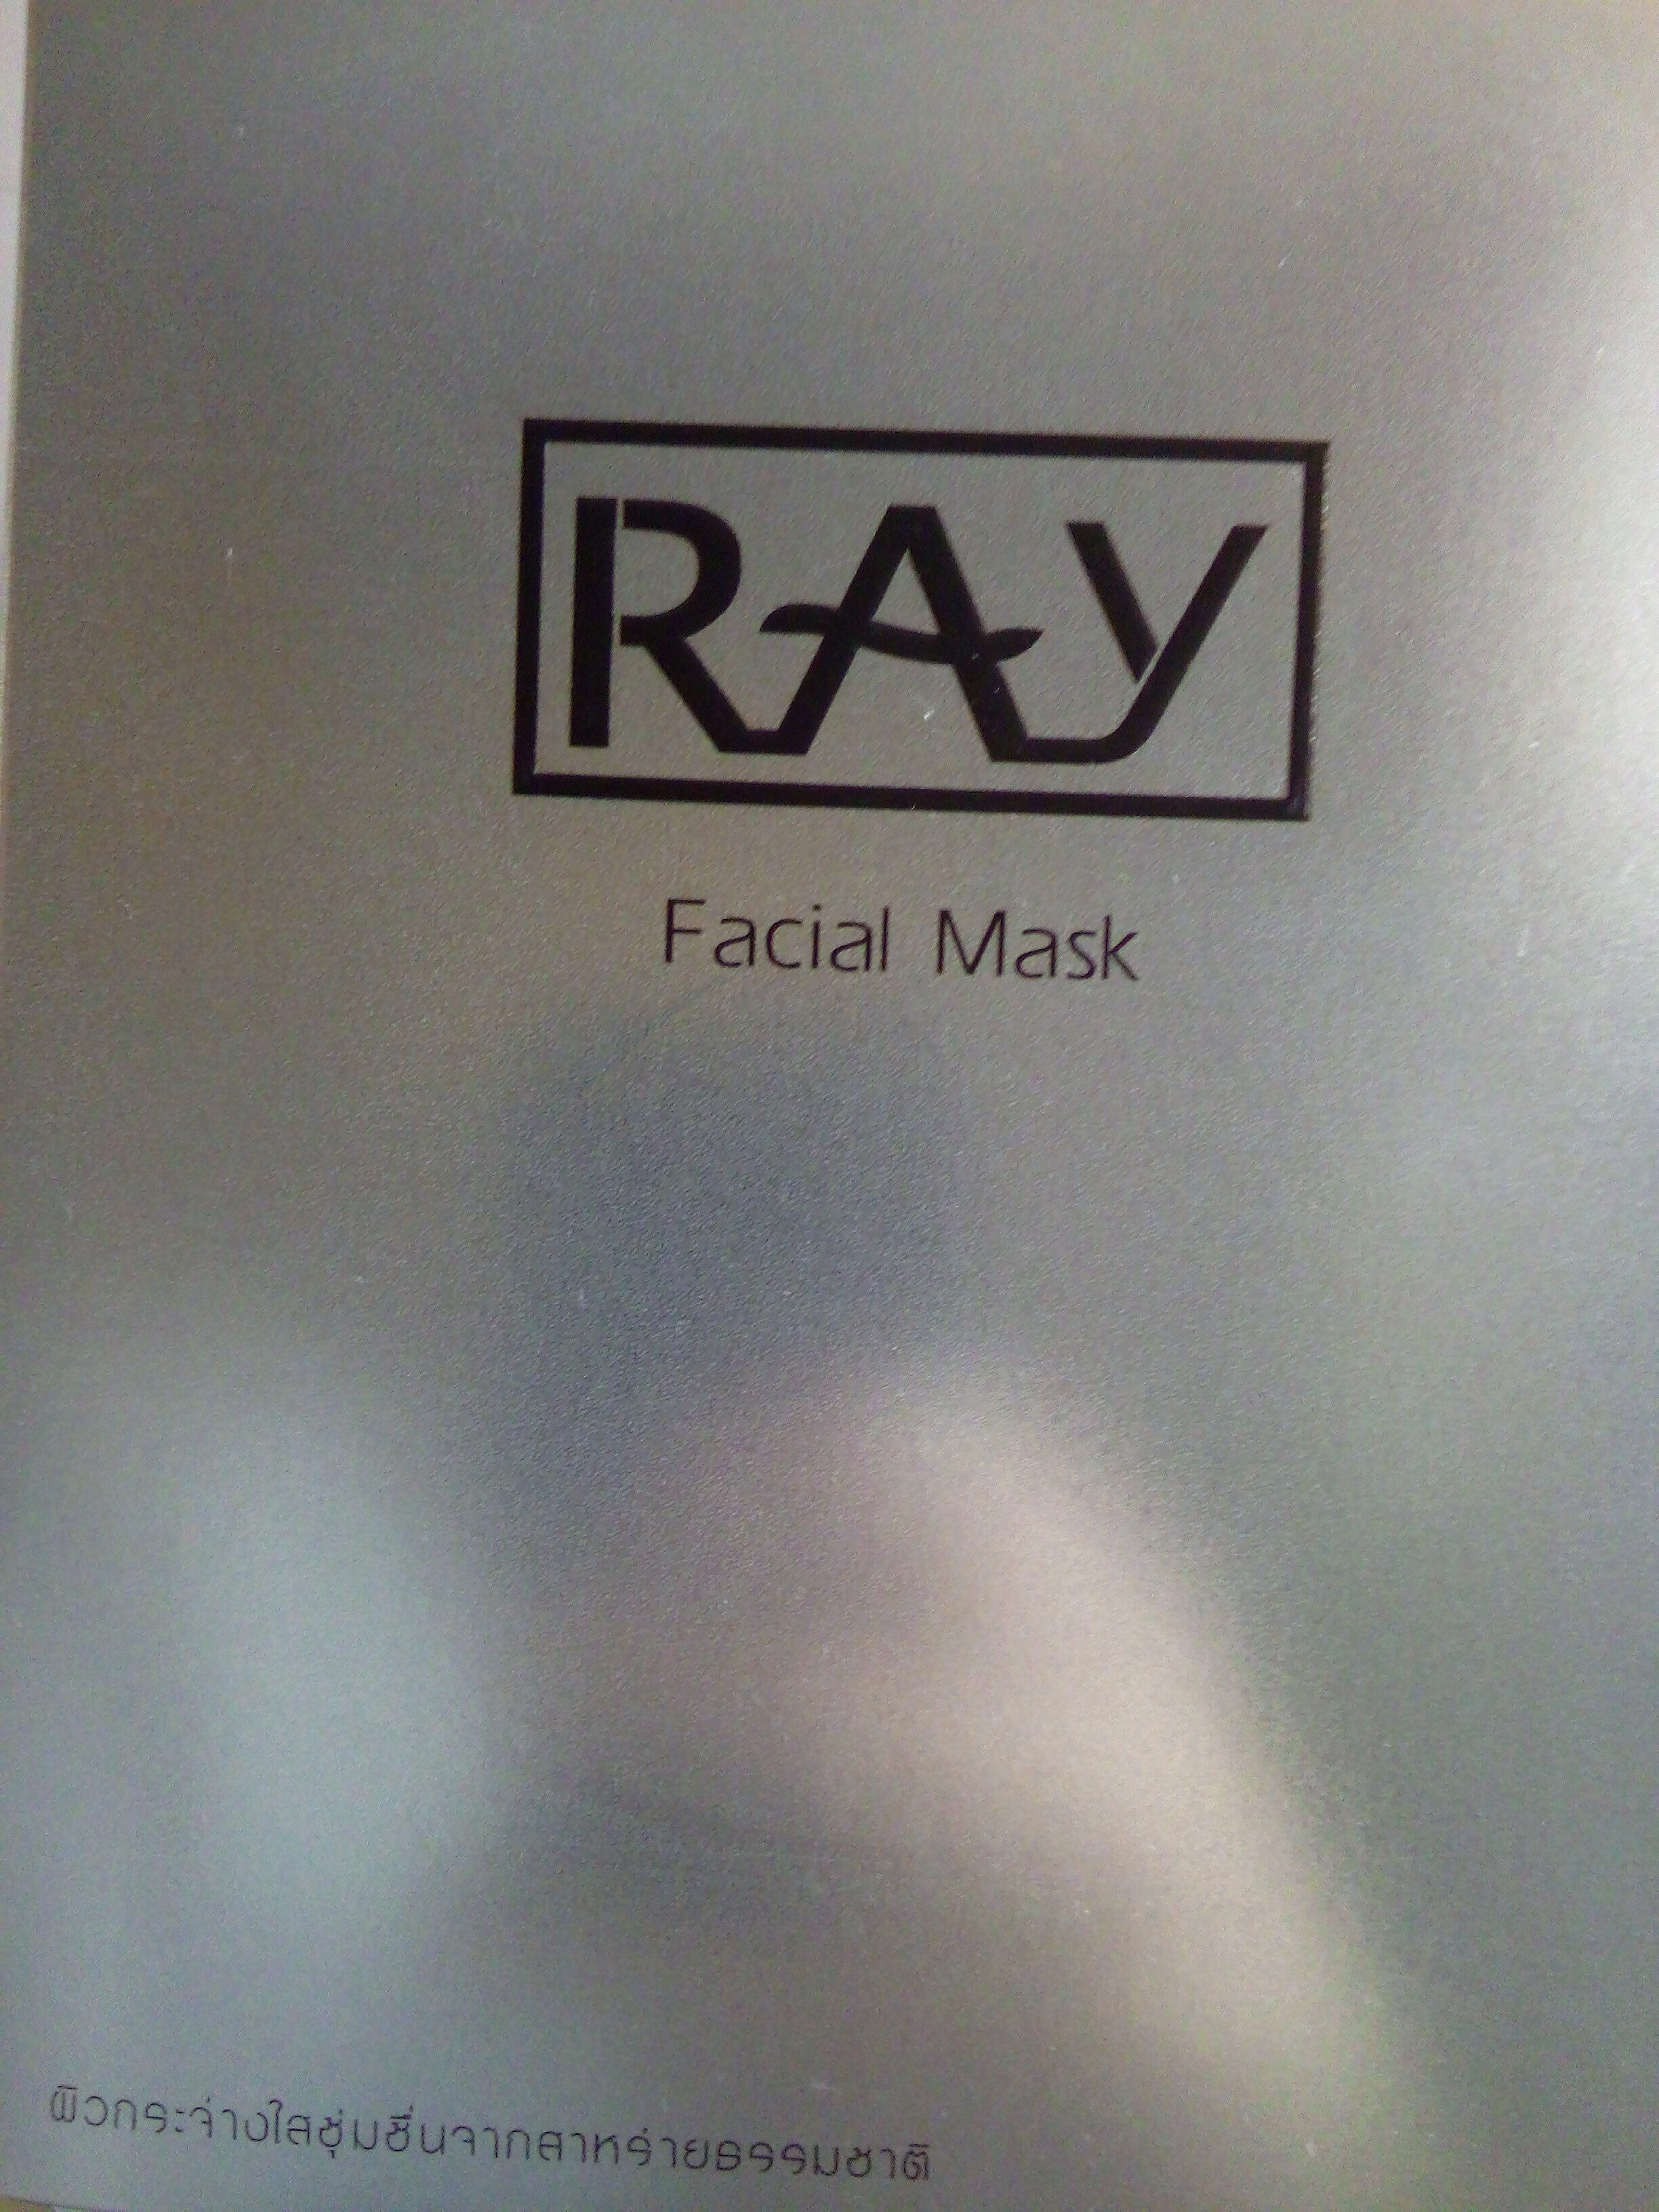 Masque visage - Product - fr